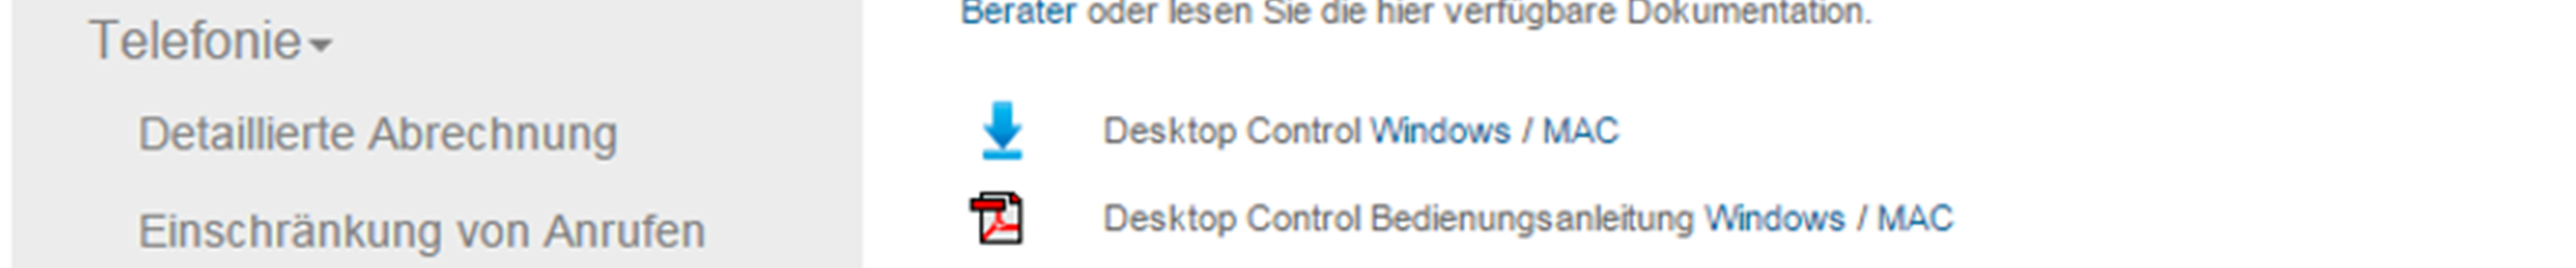 Desktop Control Quick User Guide DESKTOP CONTROL HERUNTERLADEN Laden Sie die